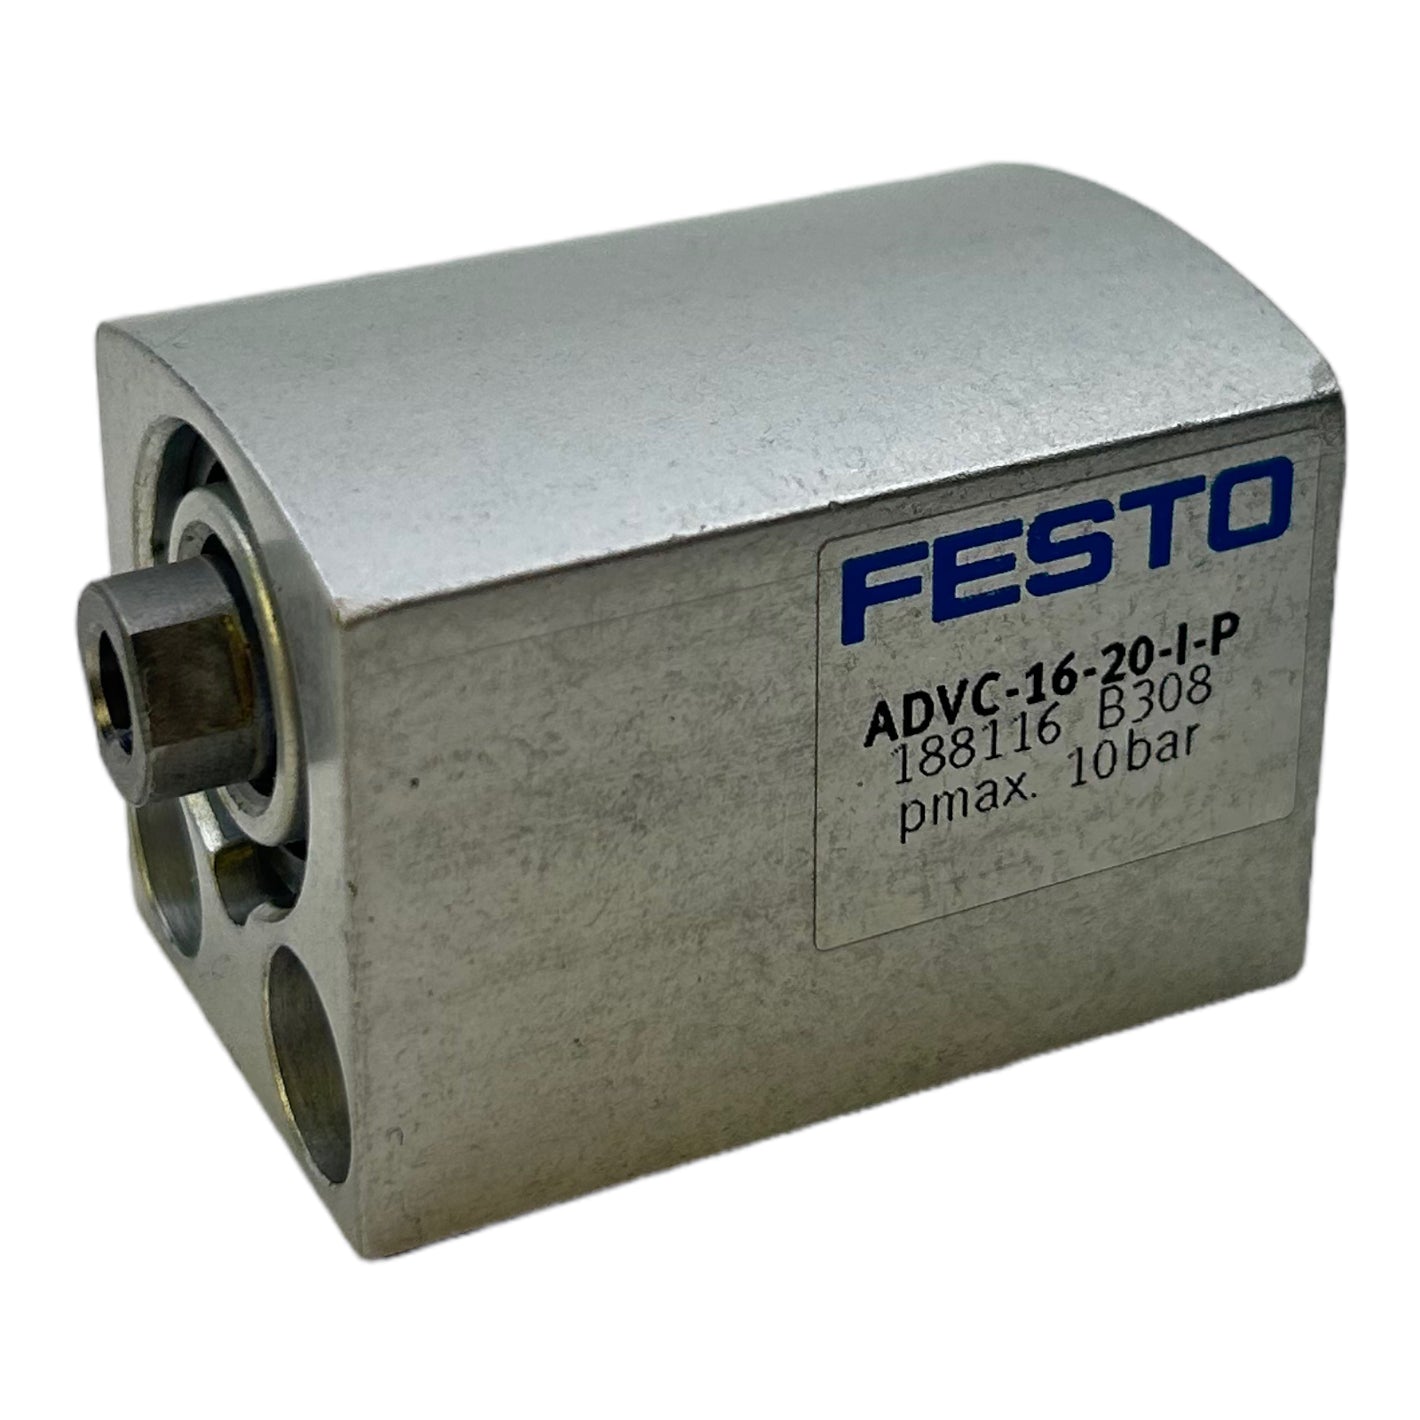 Festo ADVC-16-20-IP short stroke cylinder 188116 stroke: 20.0mm ø16mm double-acting